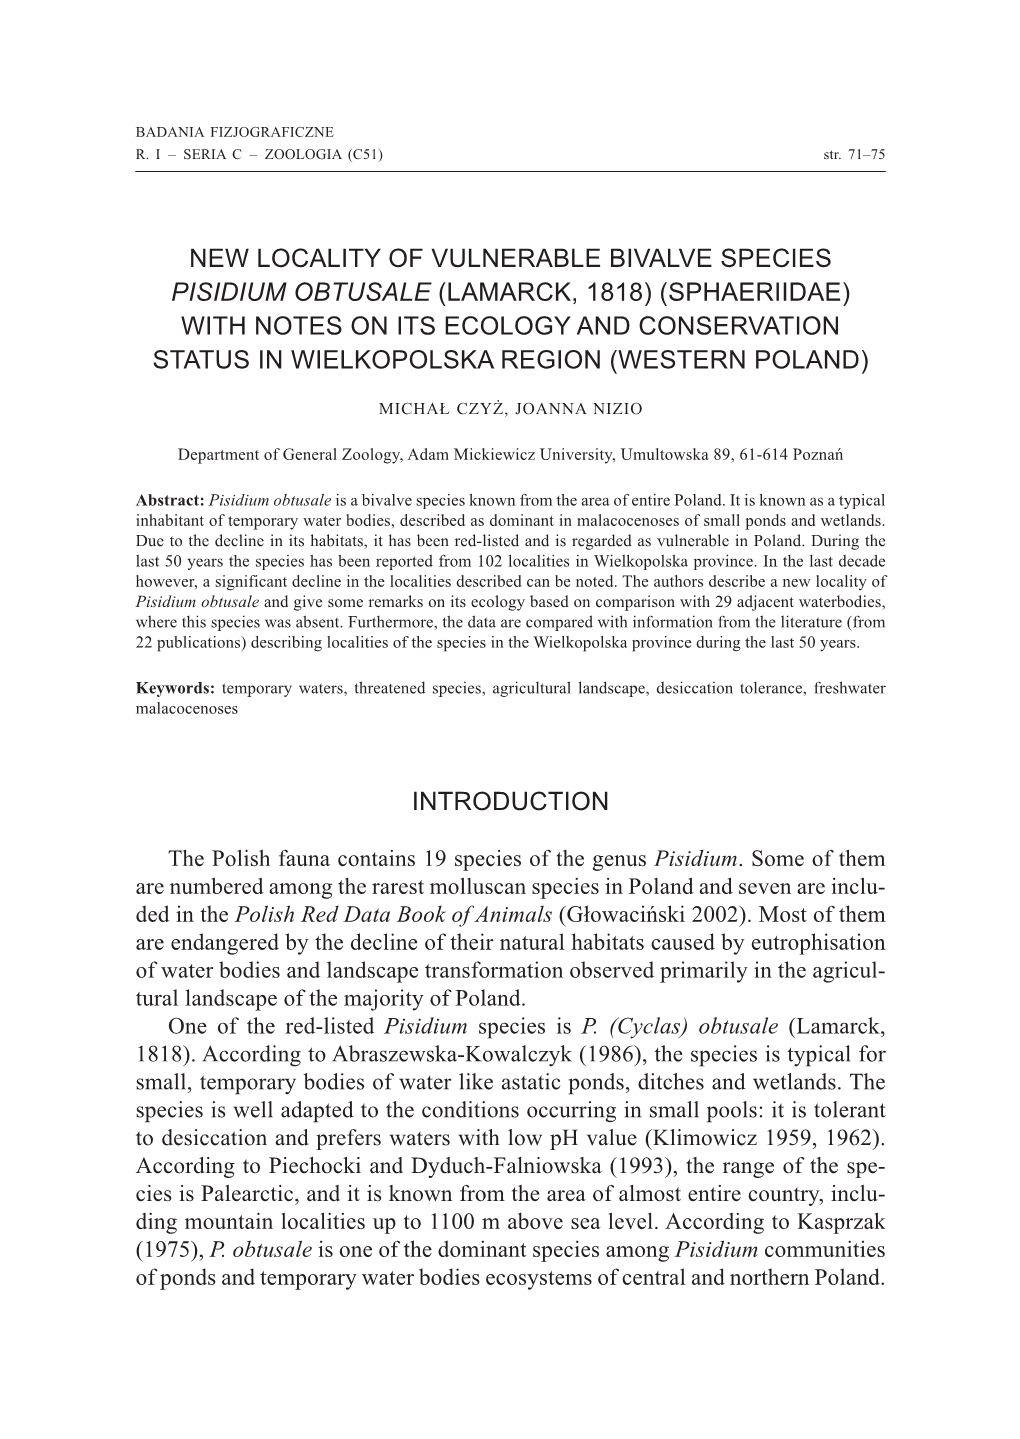 New Locality of Vulnerable Bivalve Species Pisidium Obtusale